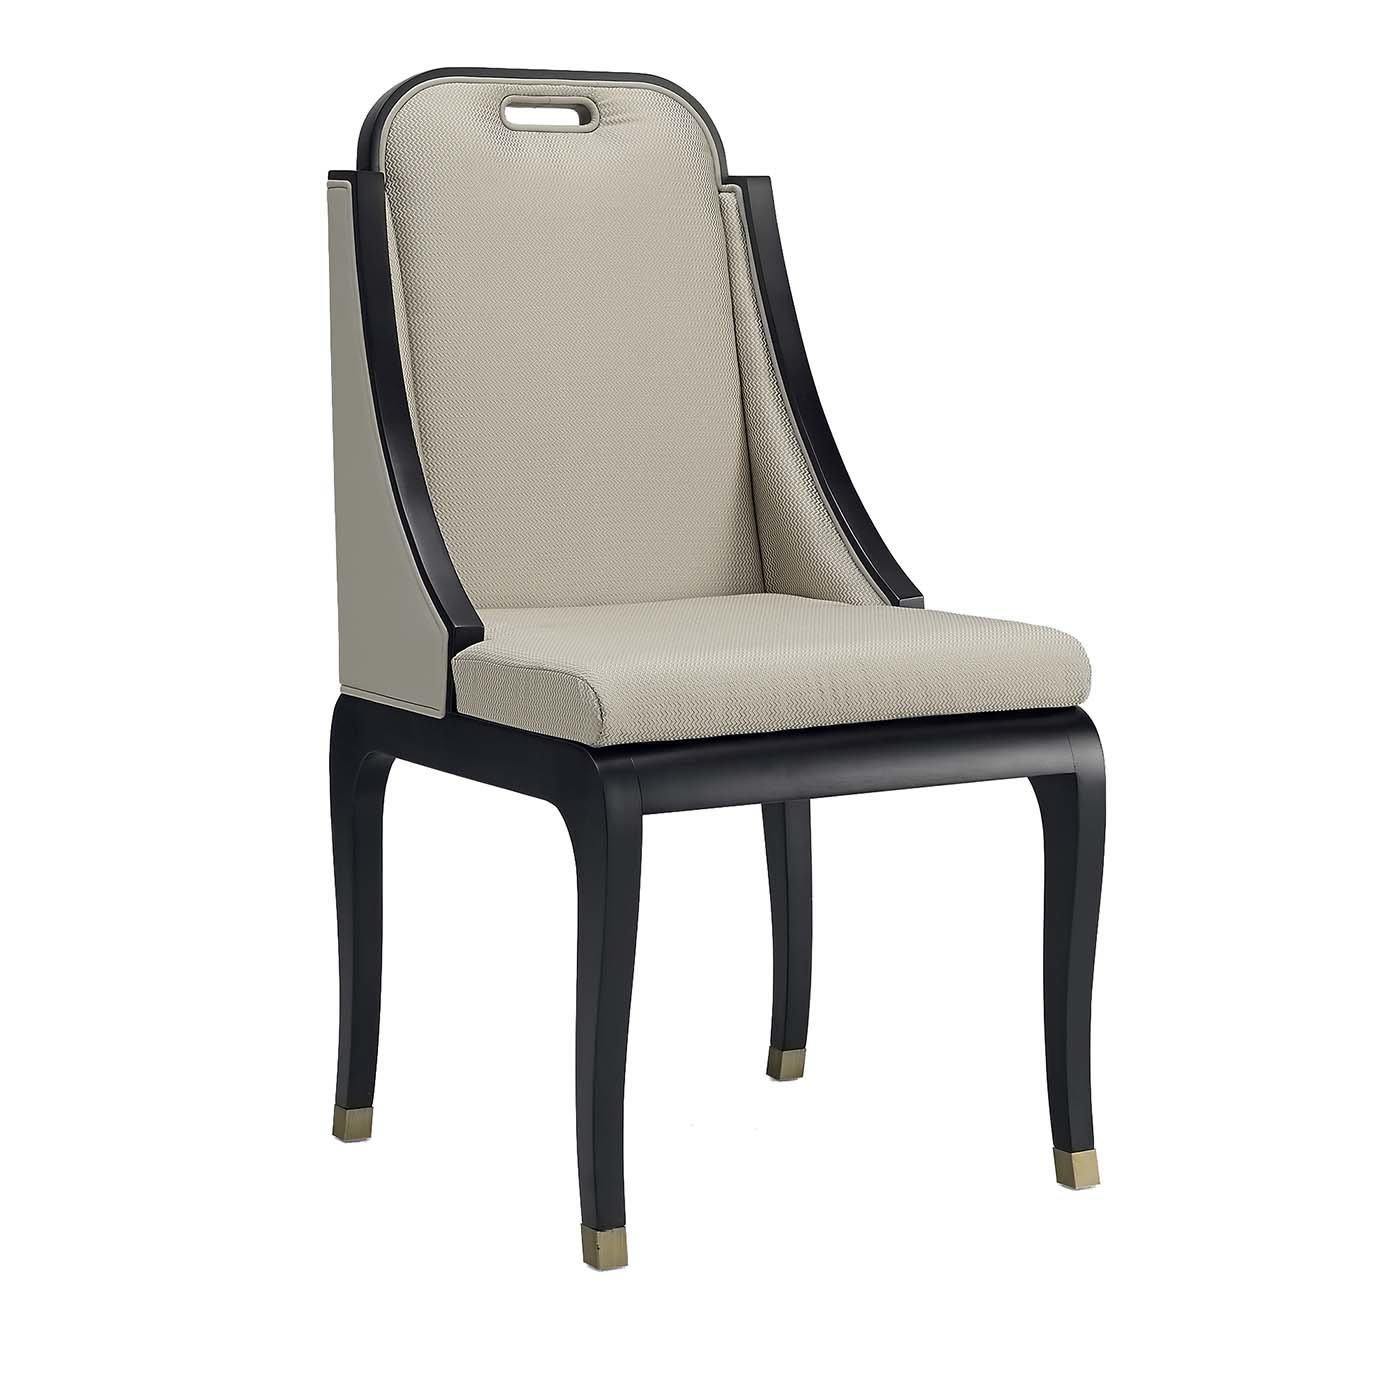 Beechwood Upholstered Chair - A.R. Arredamenti